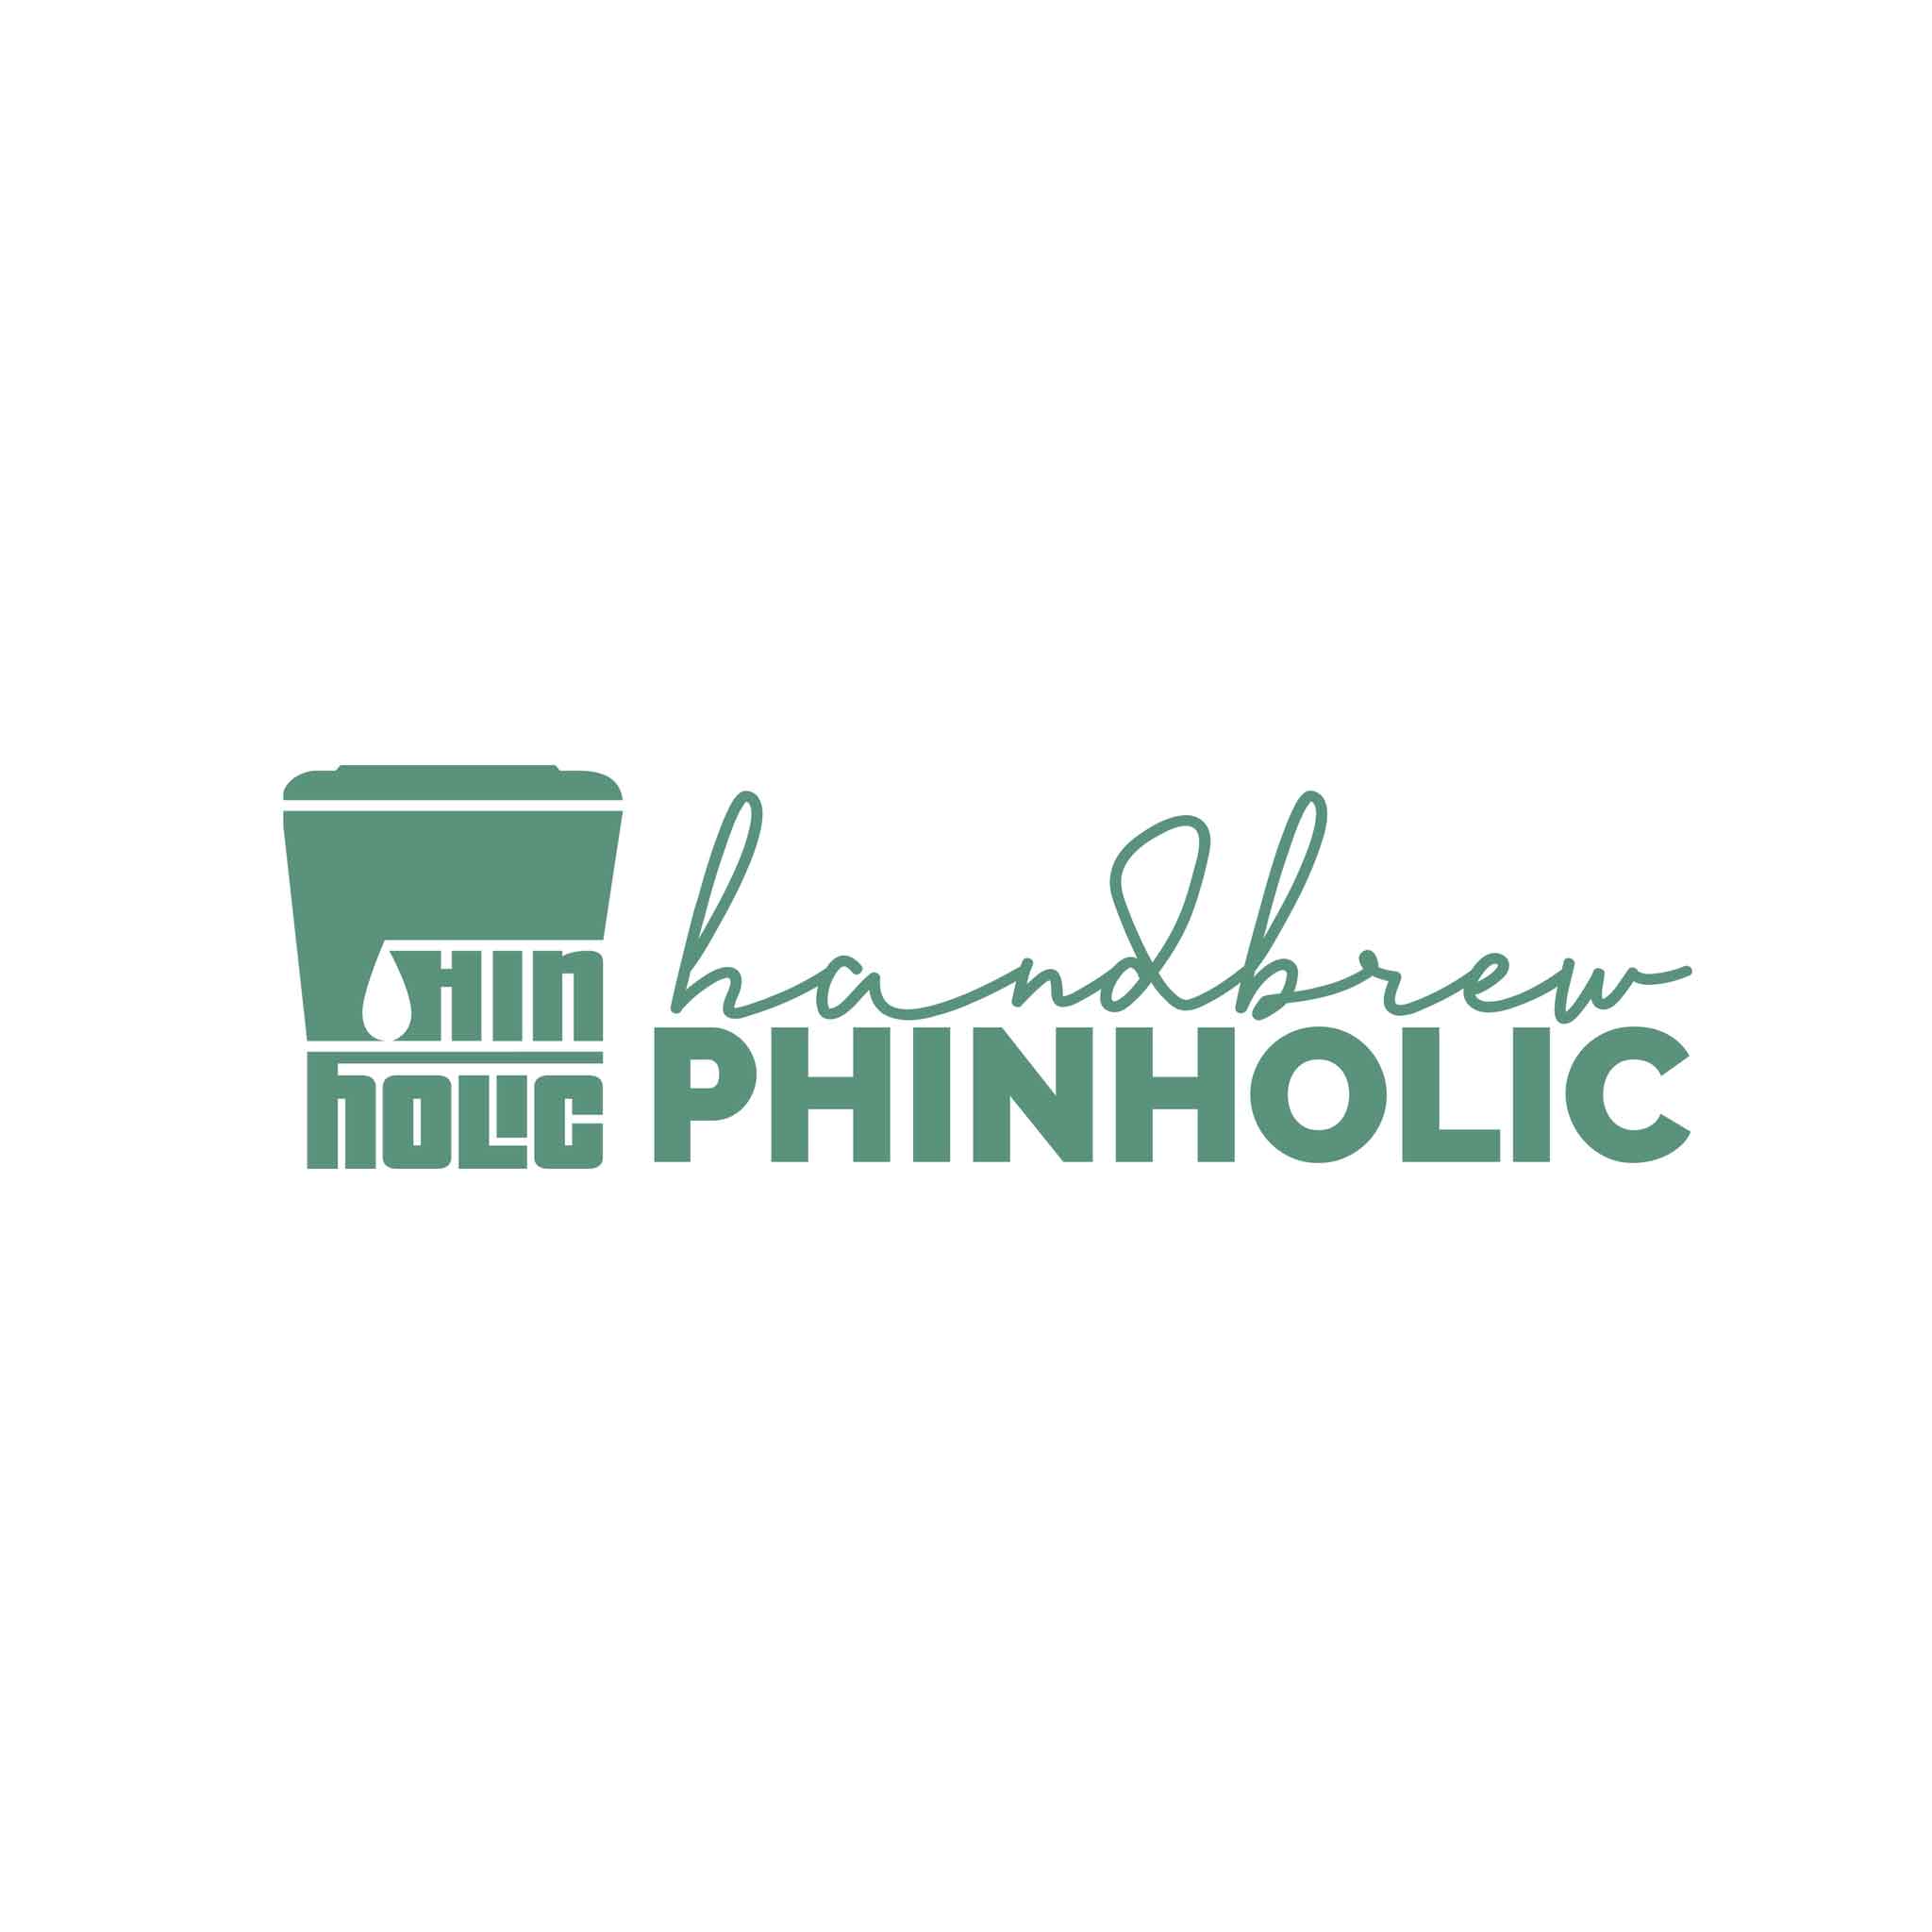 PhinHolic HandBrew - Hue Specialty Coffee